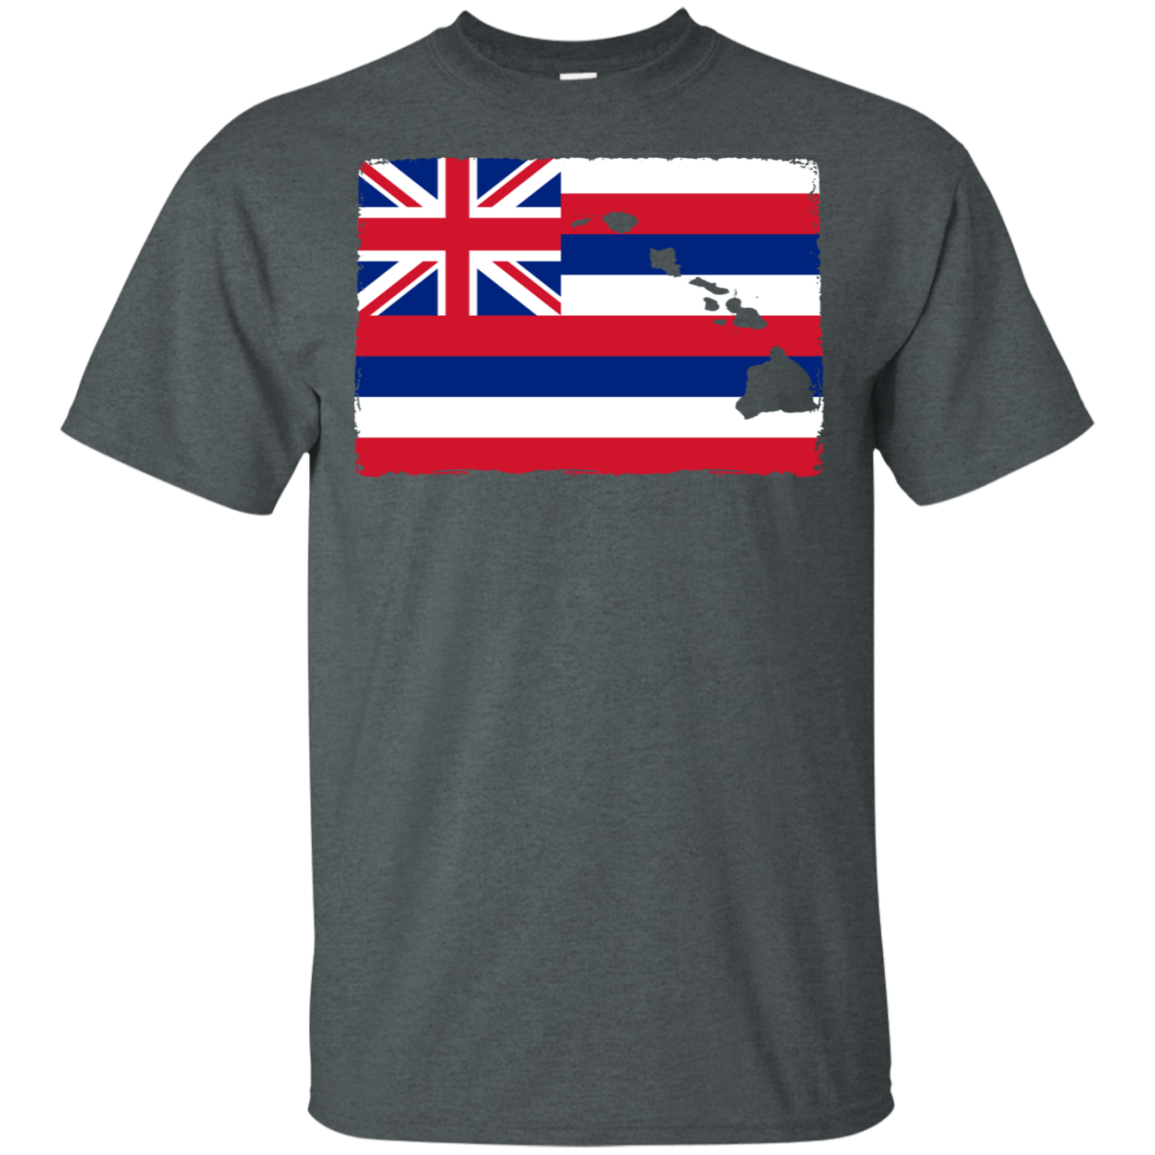 Hawai'i Aloha State Flag Ultra Cotton T-Shirt, T-Shirts, Hawaii Nei All Day